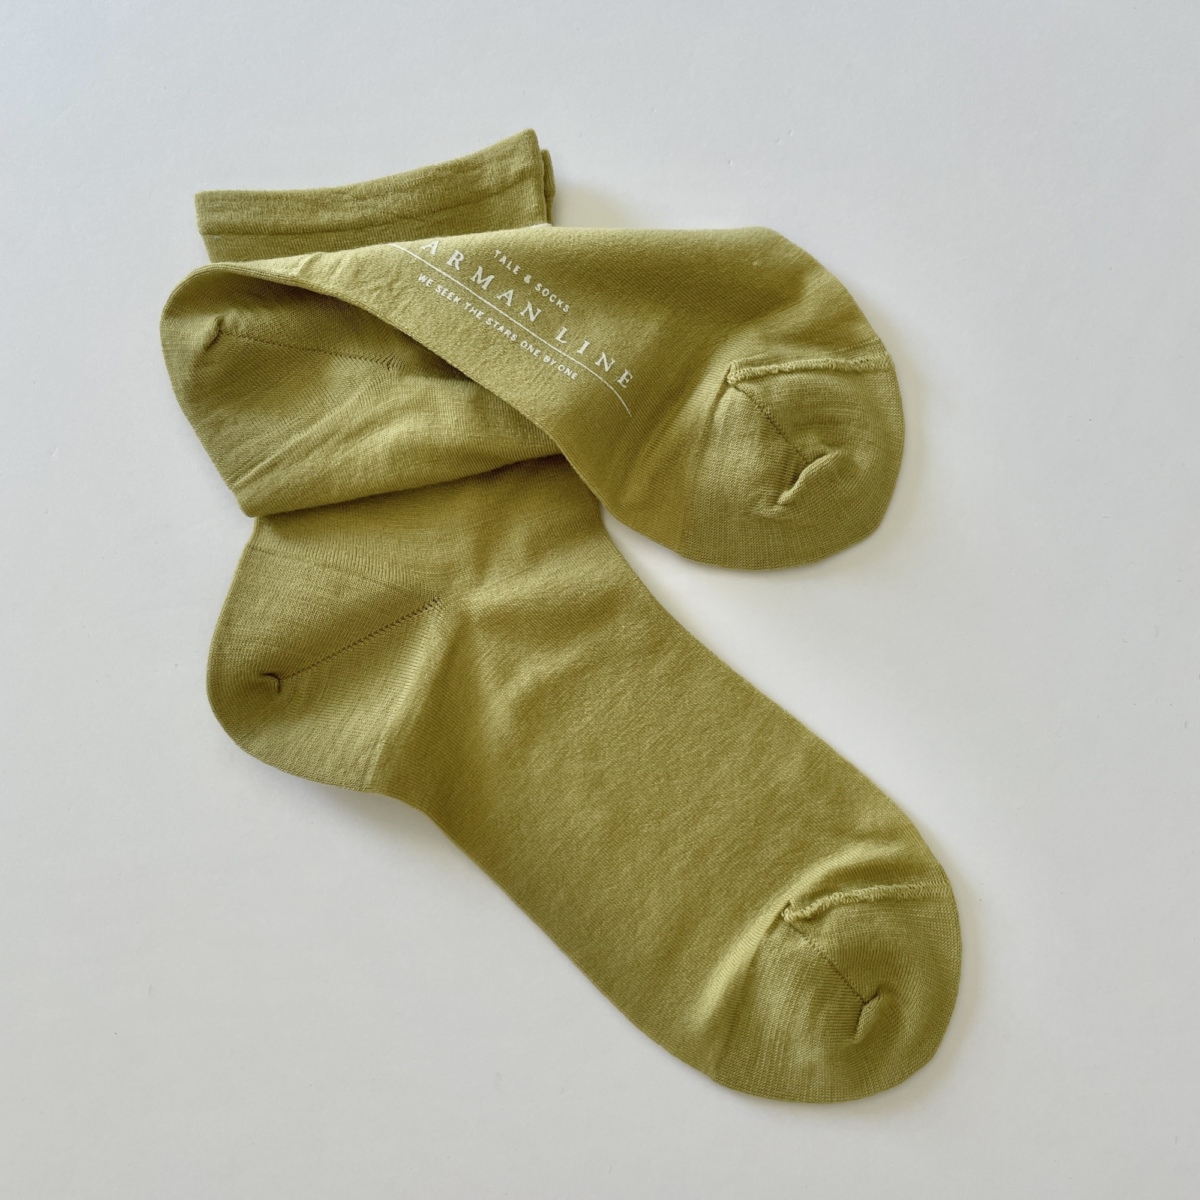 KARMAN LINE CANCER / socks / Lime